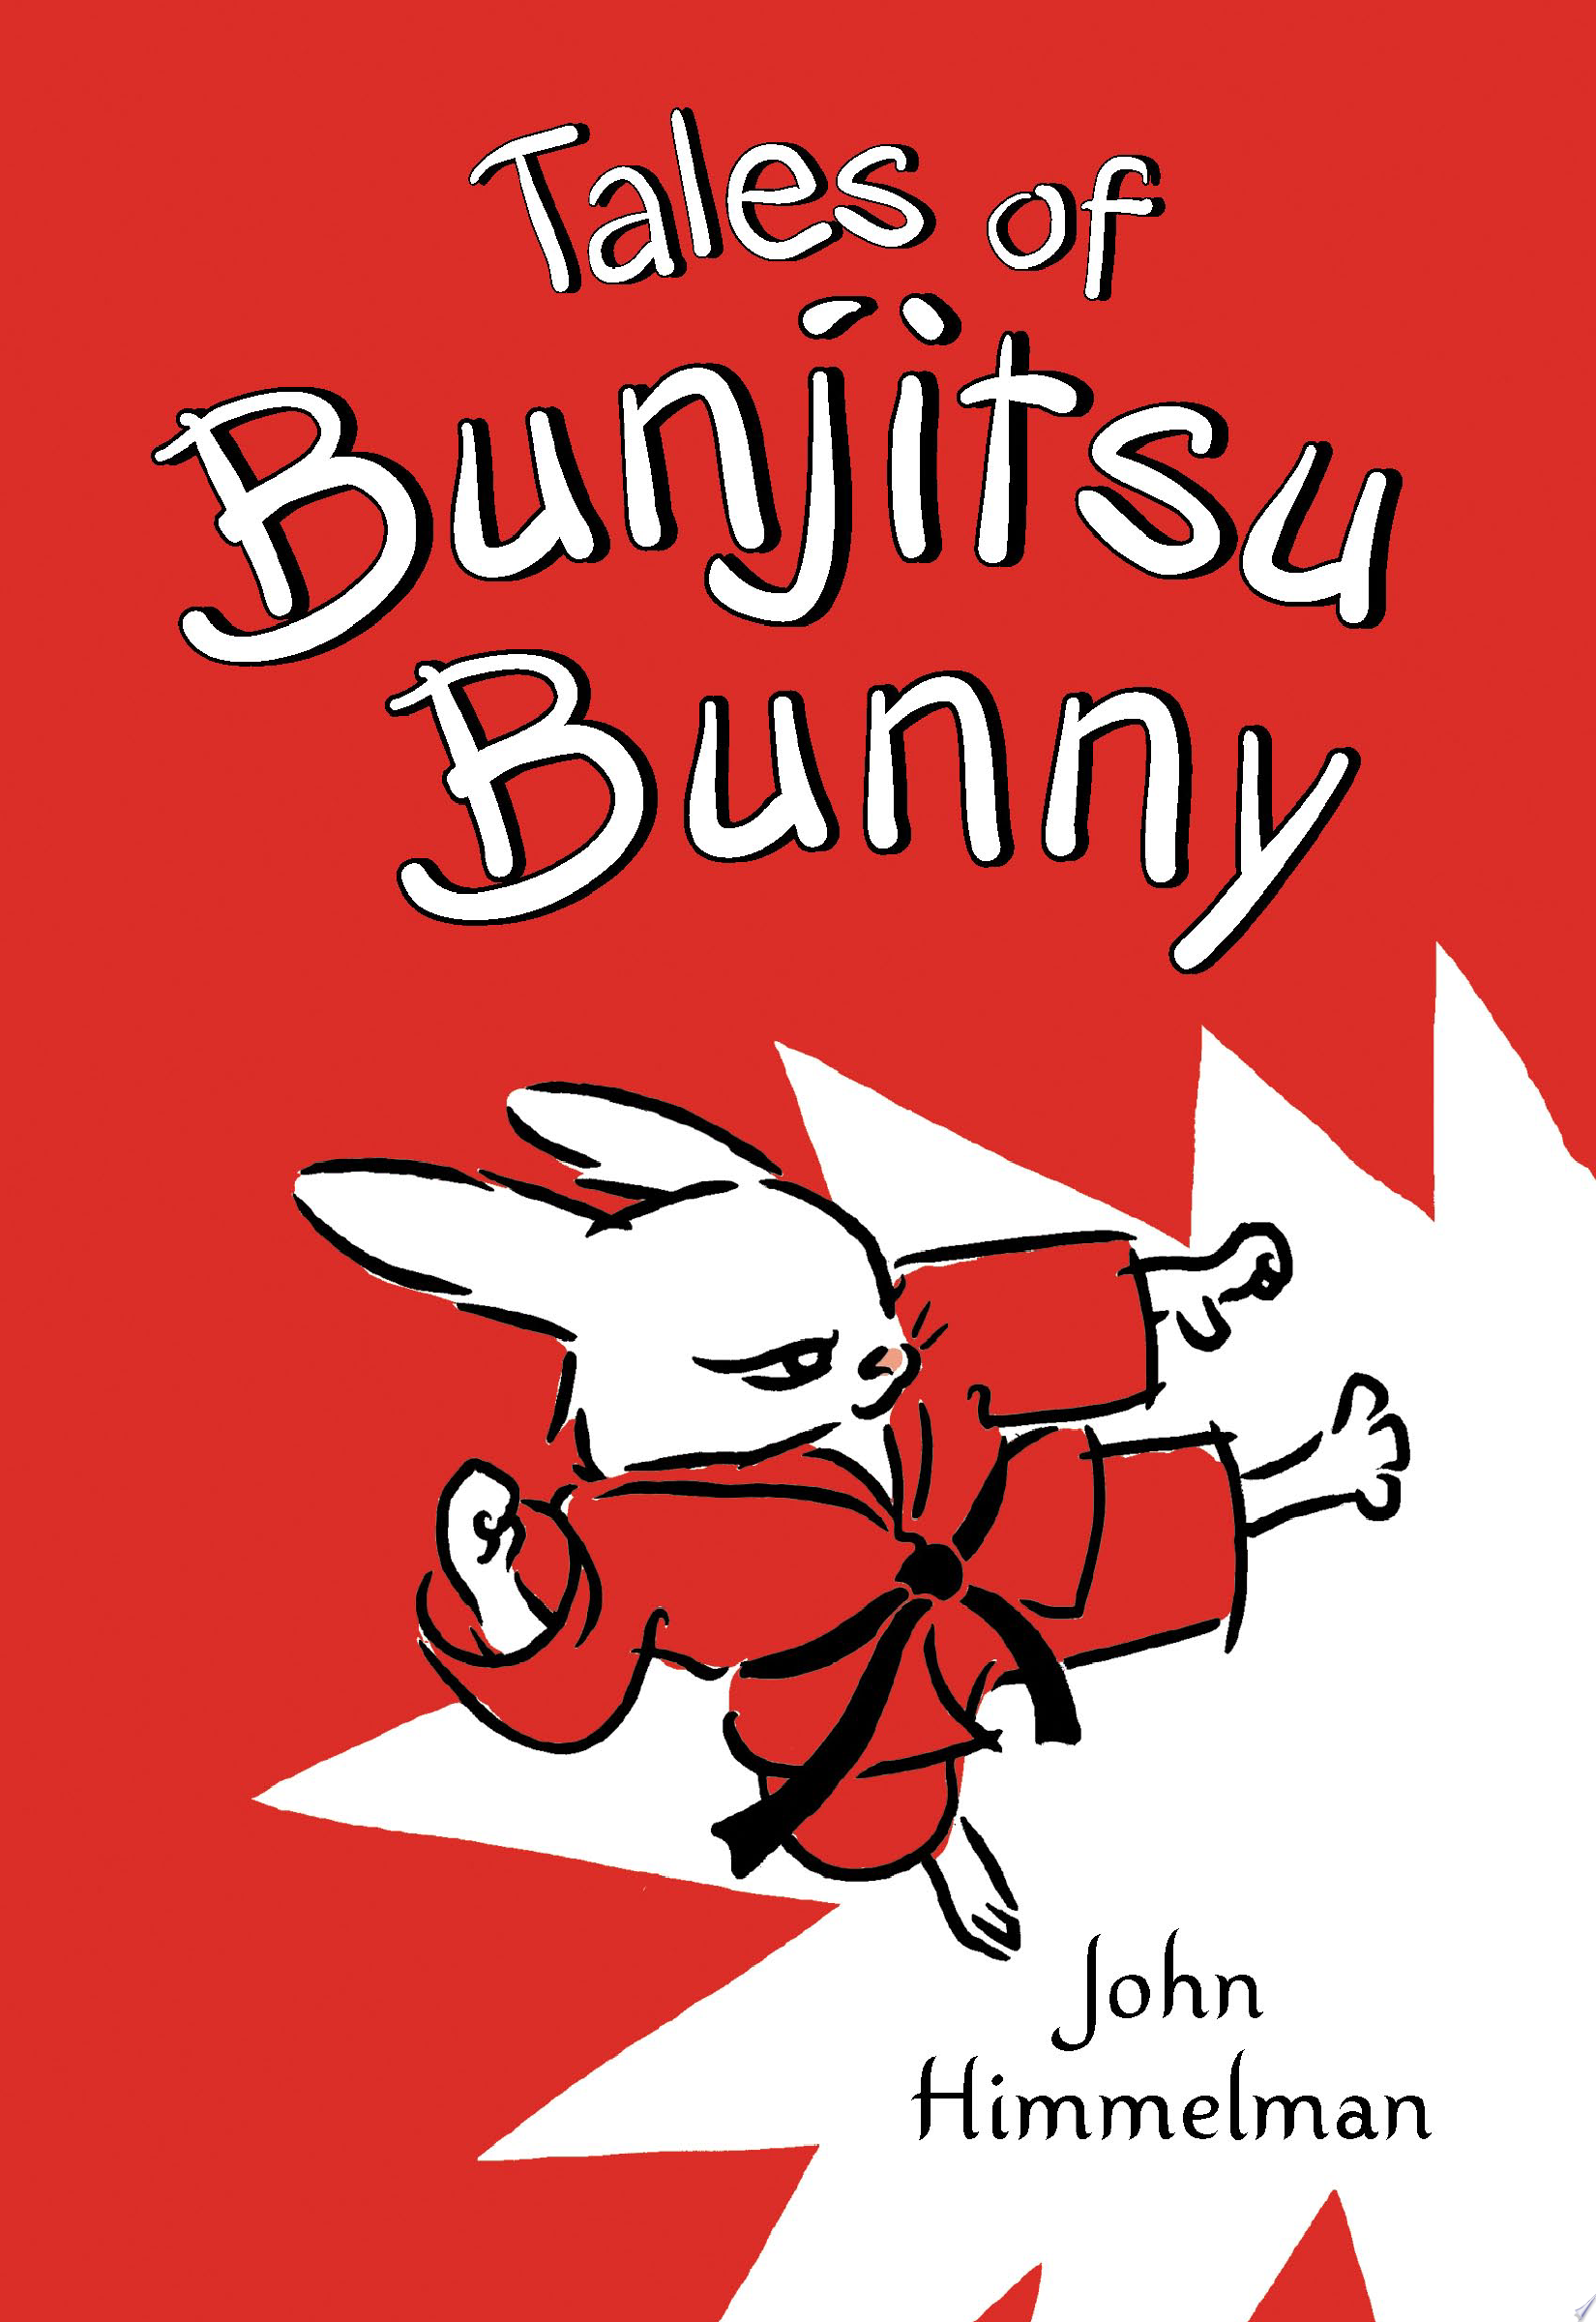 Image for "Tales of Bunjitsu Bunny"